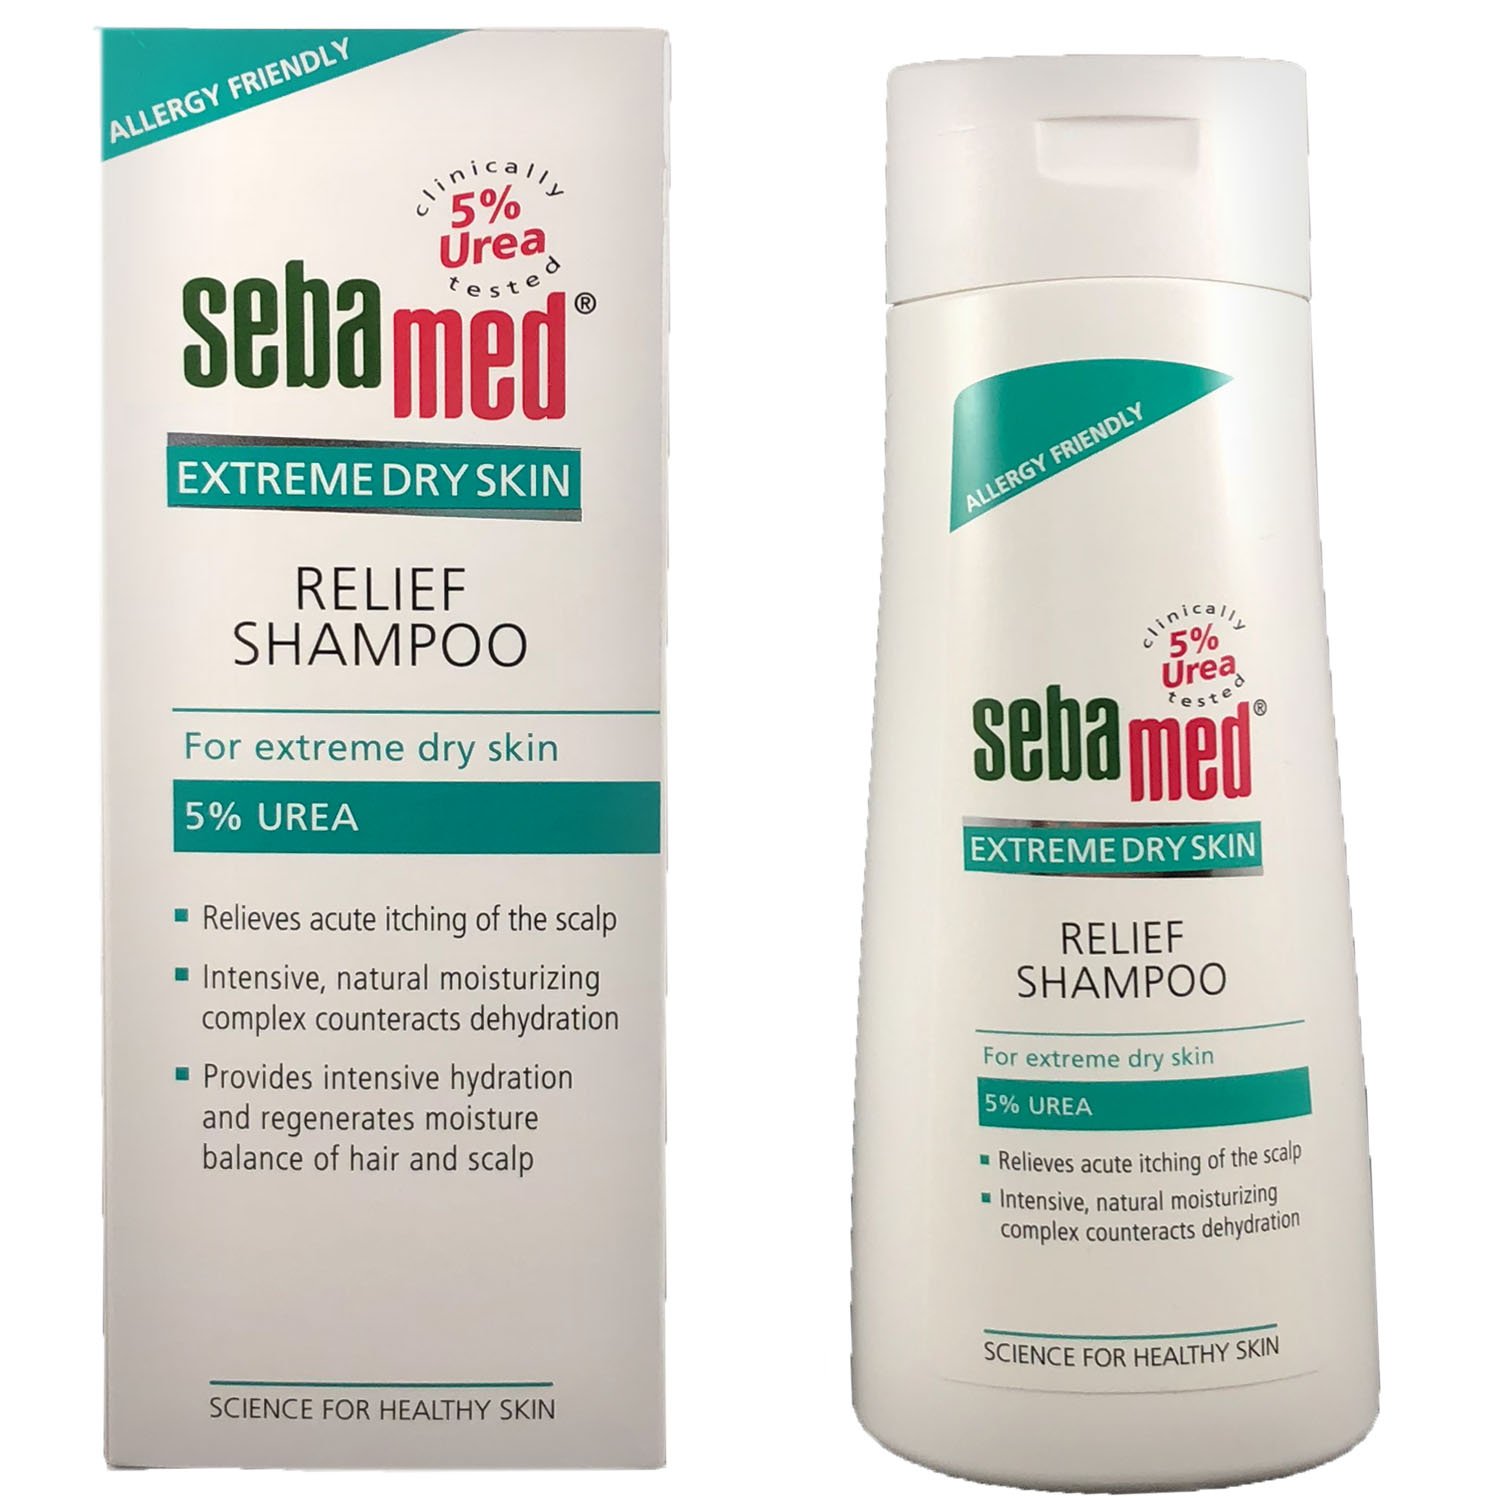 Шампунь Sebamed Extreme Dry Skin для очень сухих волос 5%, 200 мл - фото 3